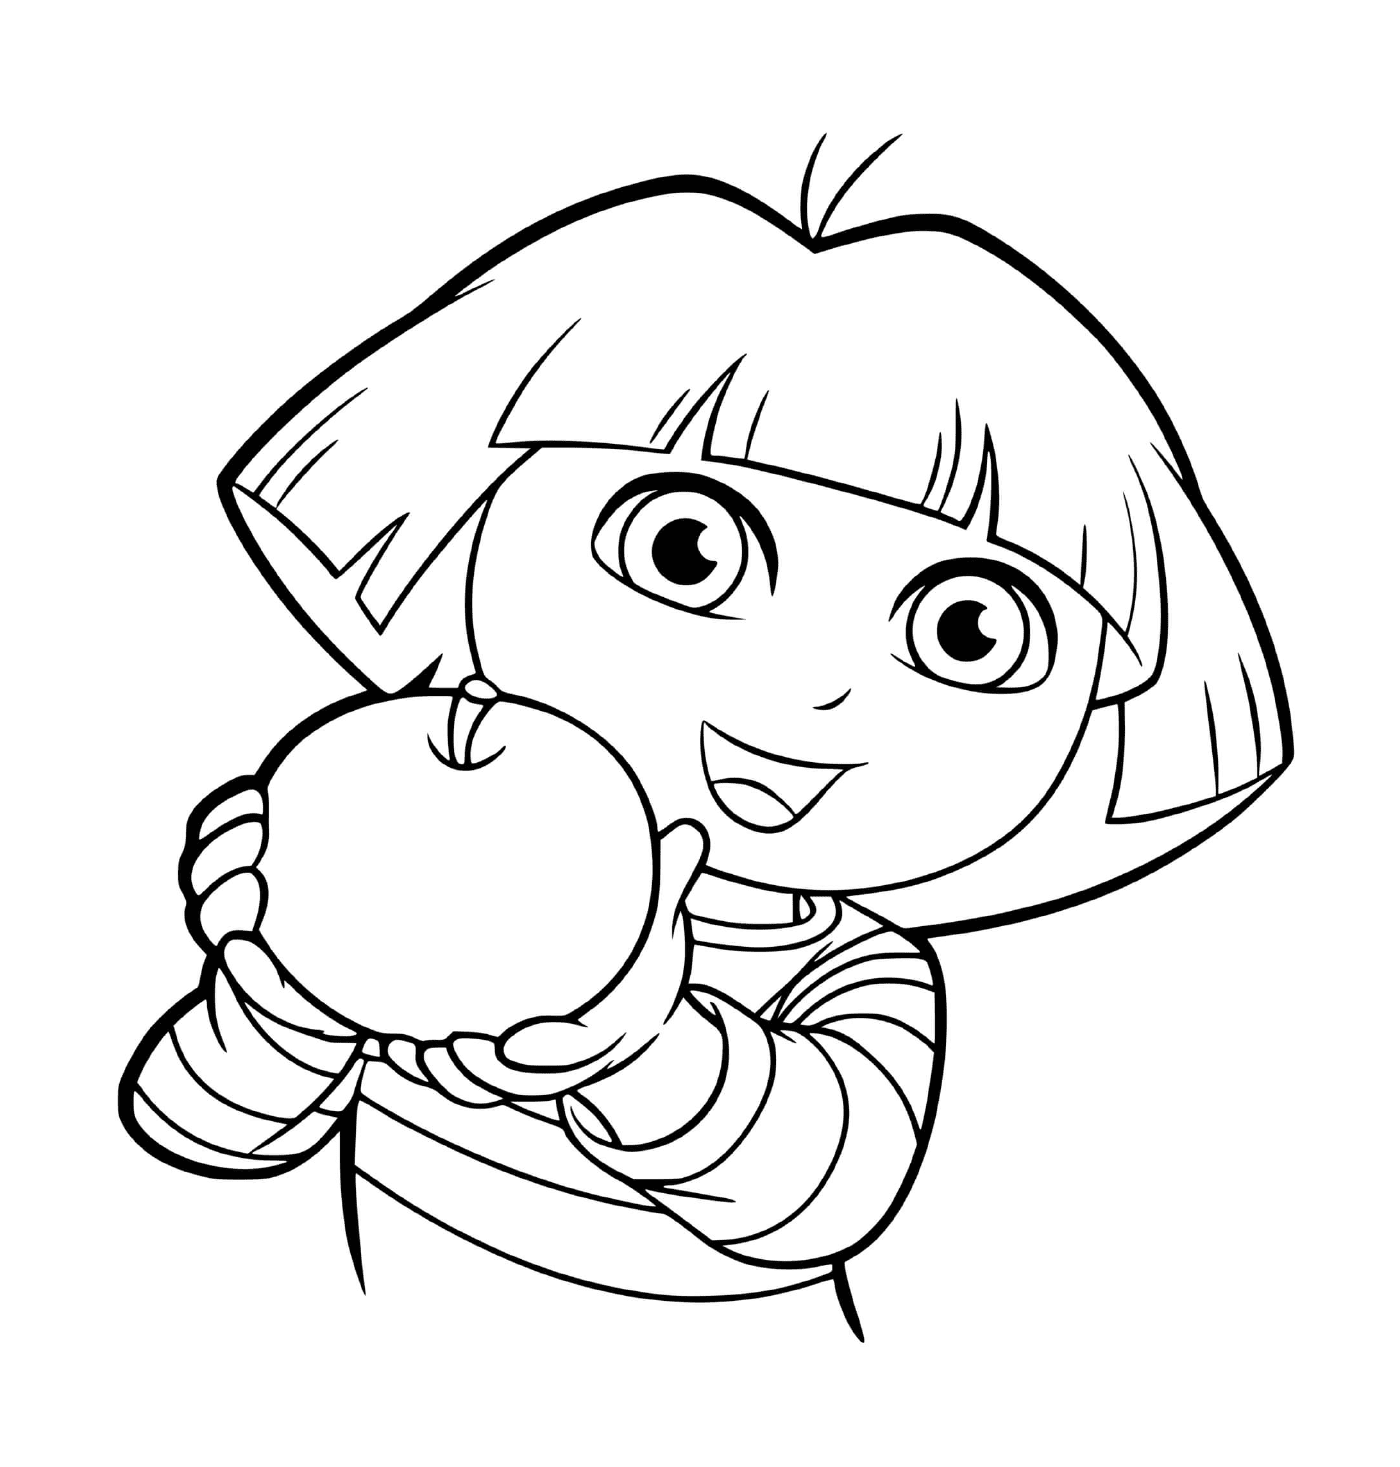  Dora loves eating apples with appetite 